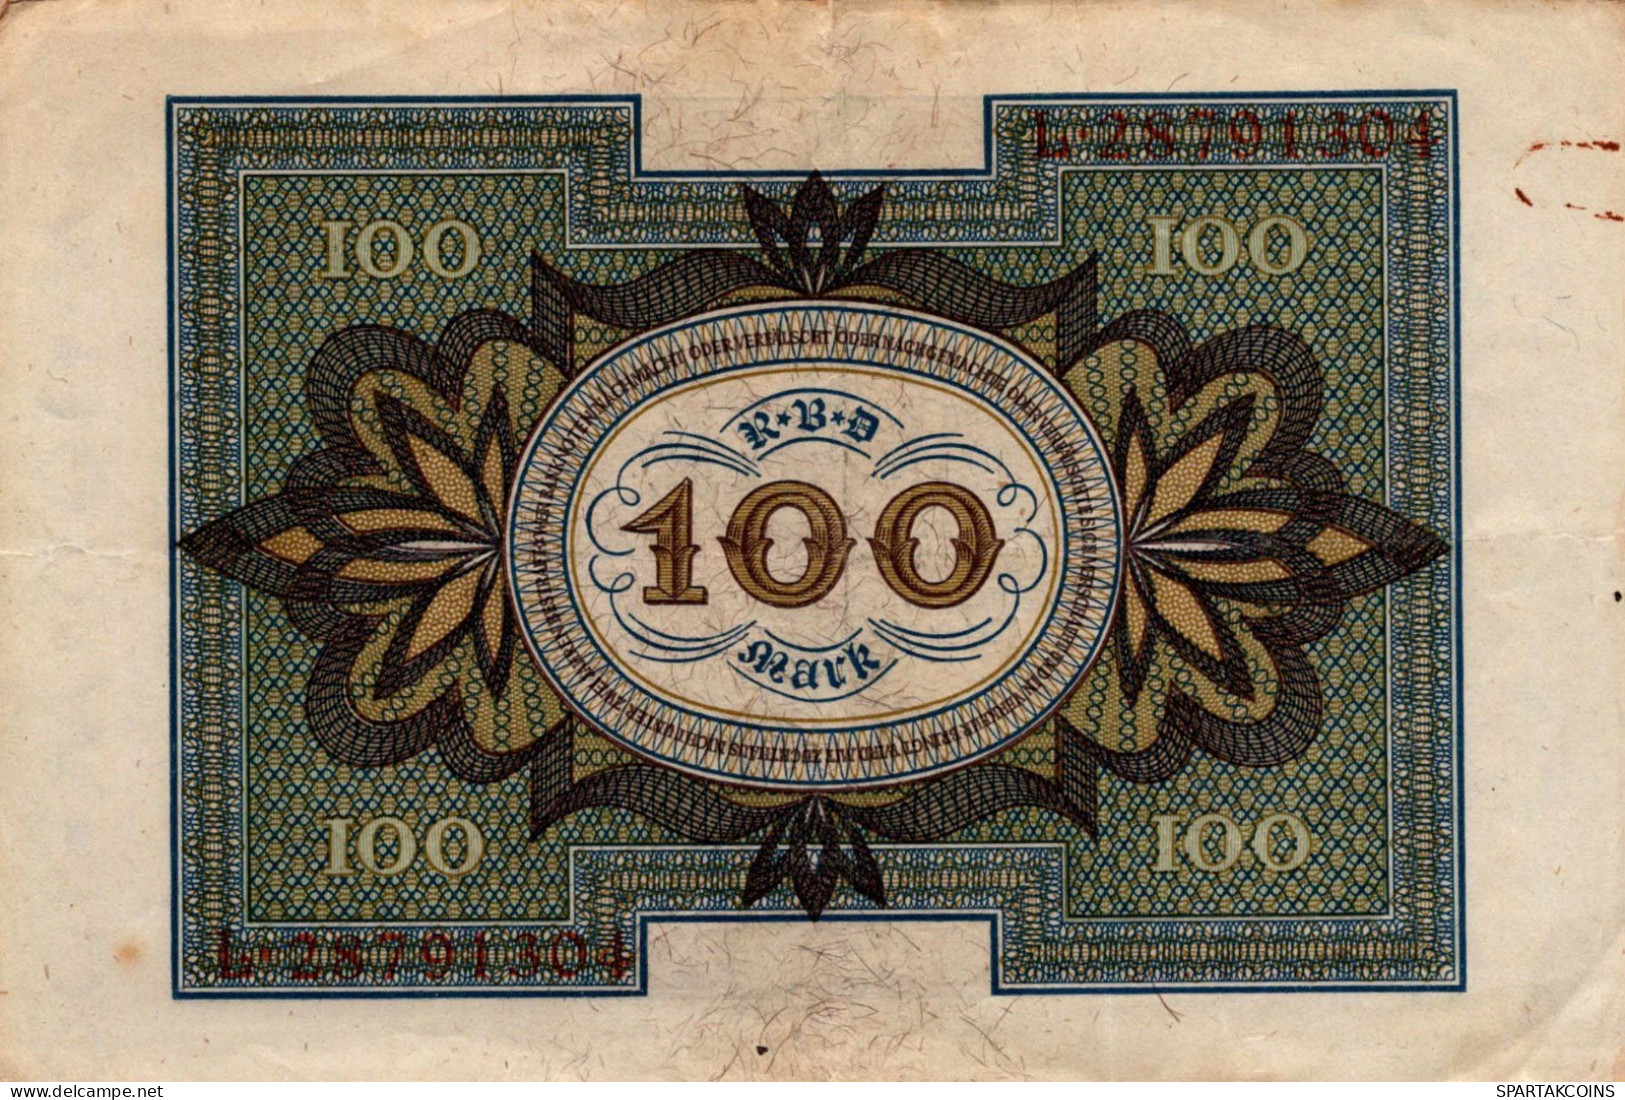 100 MARK 1920 Stadt BERLIN DEUTSCHLAND Papiergeld Banknote #PL089 - [11] Lokale Uitgaven